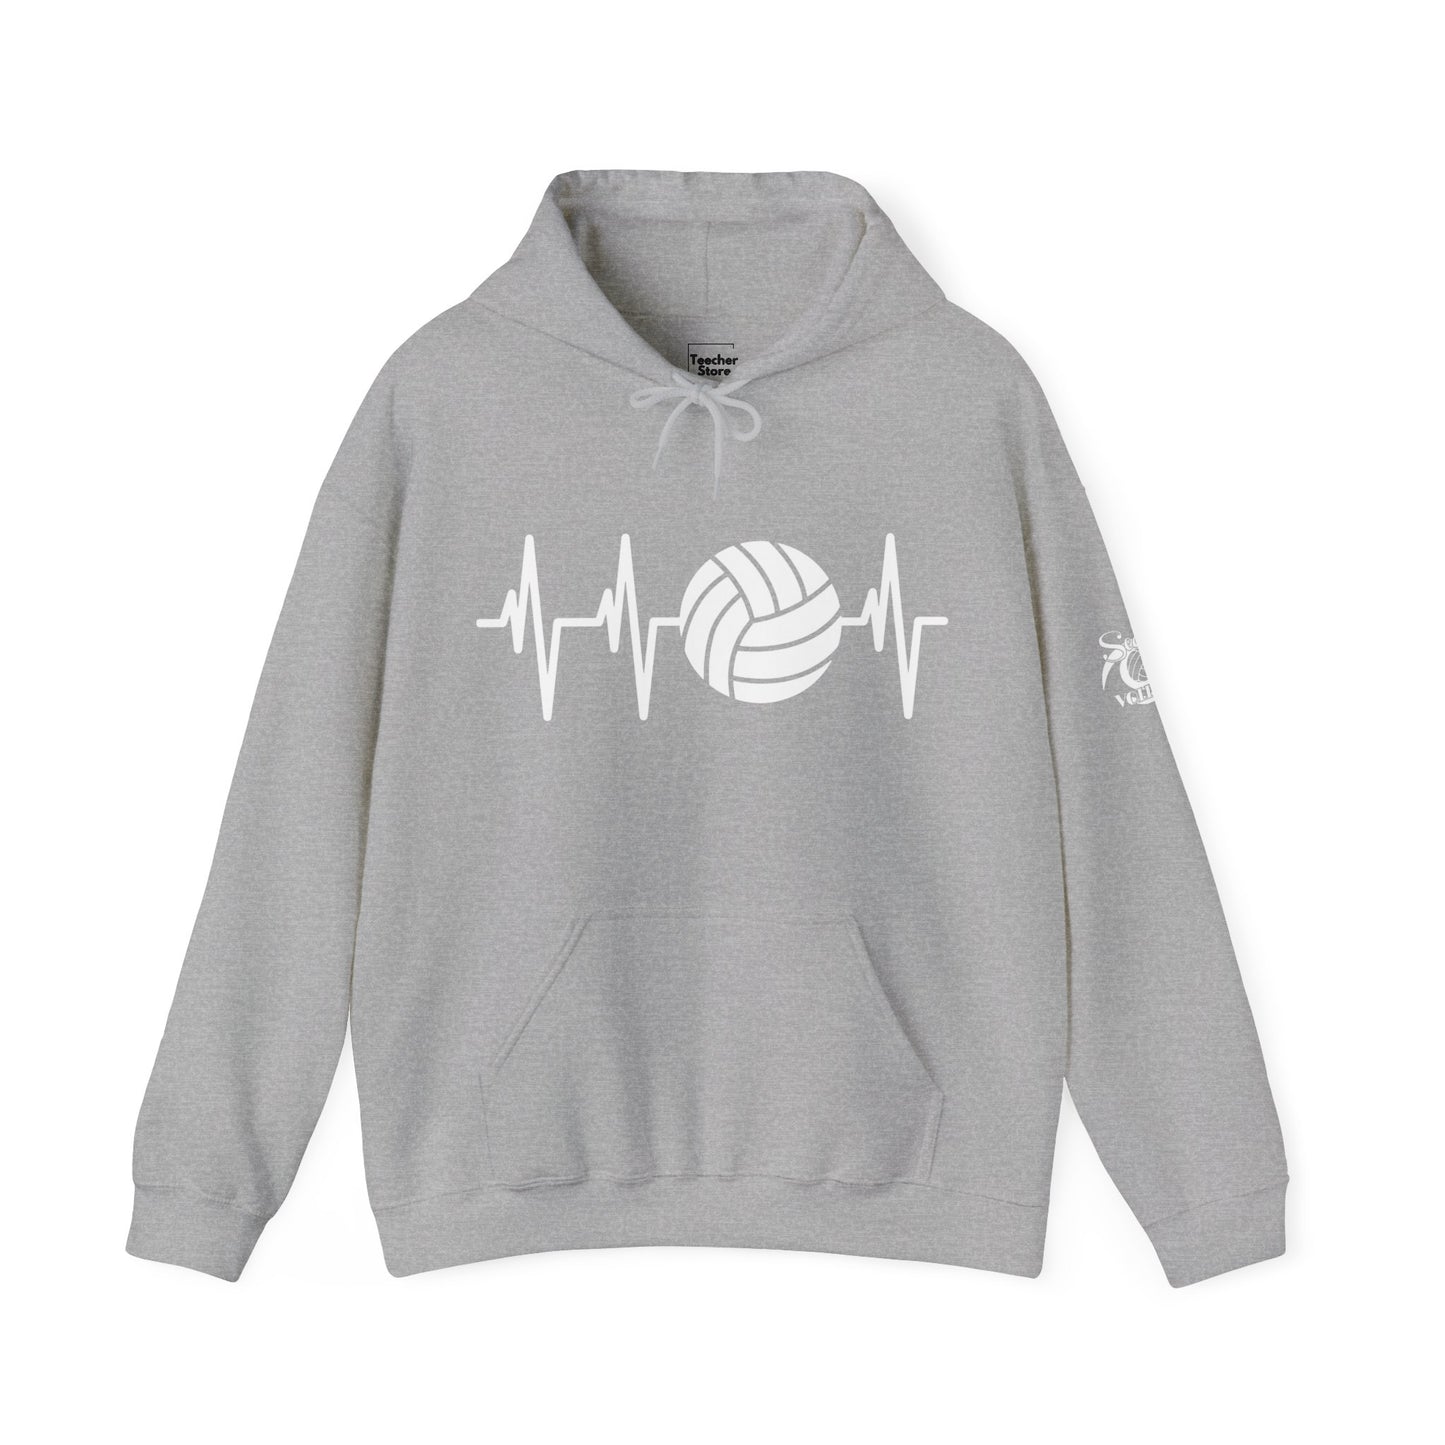 SS Volleyball Heartbeat Hooded Sweatshirt